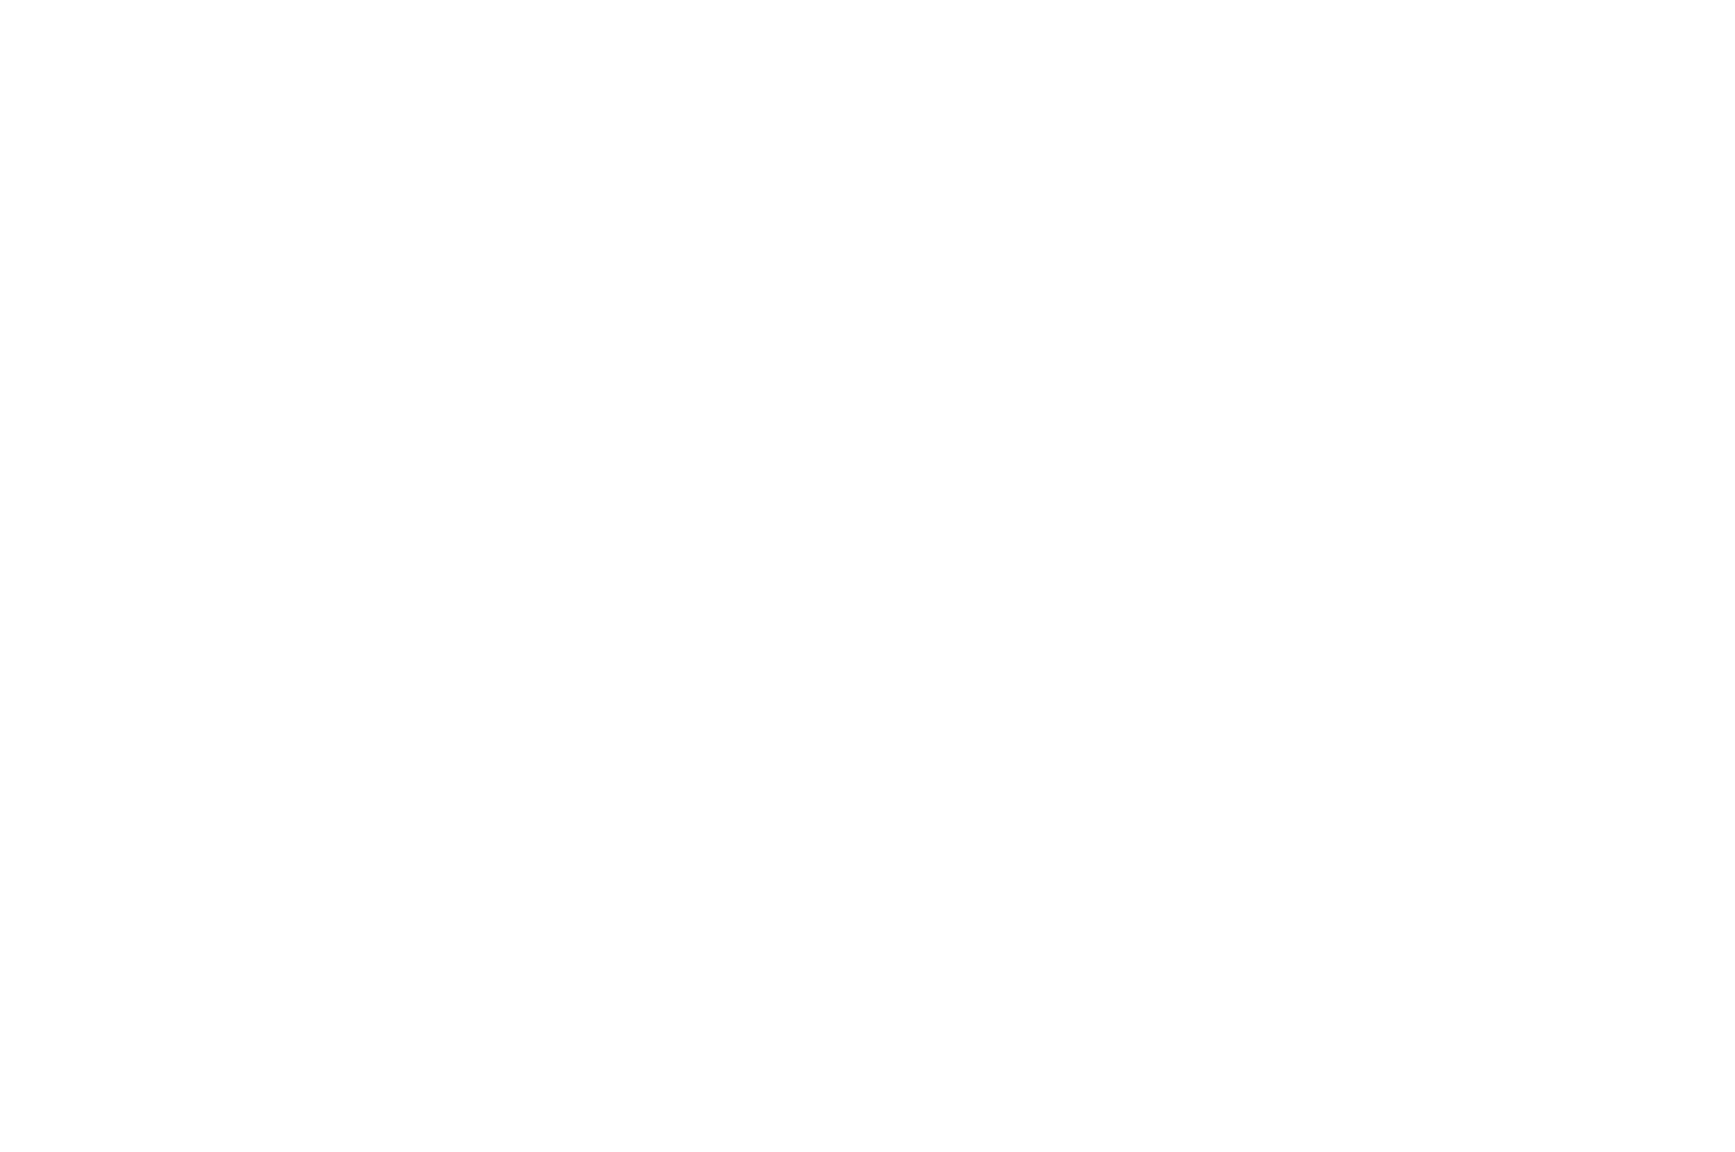 MUSIC VIDEO SONGWRITING - Global Music Awards - 2021